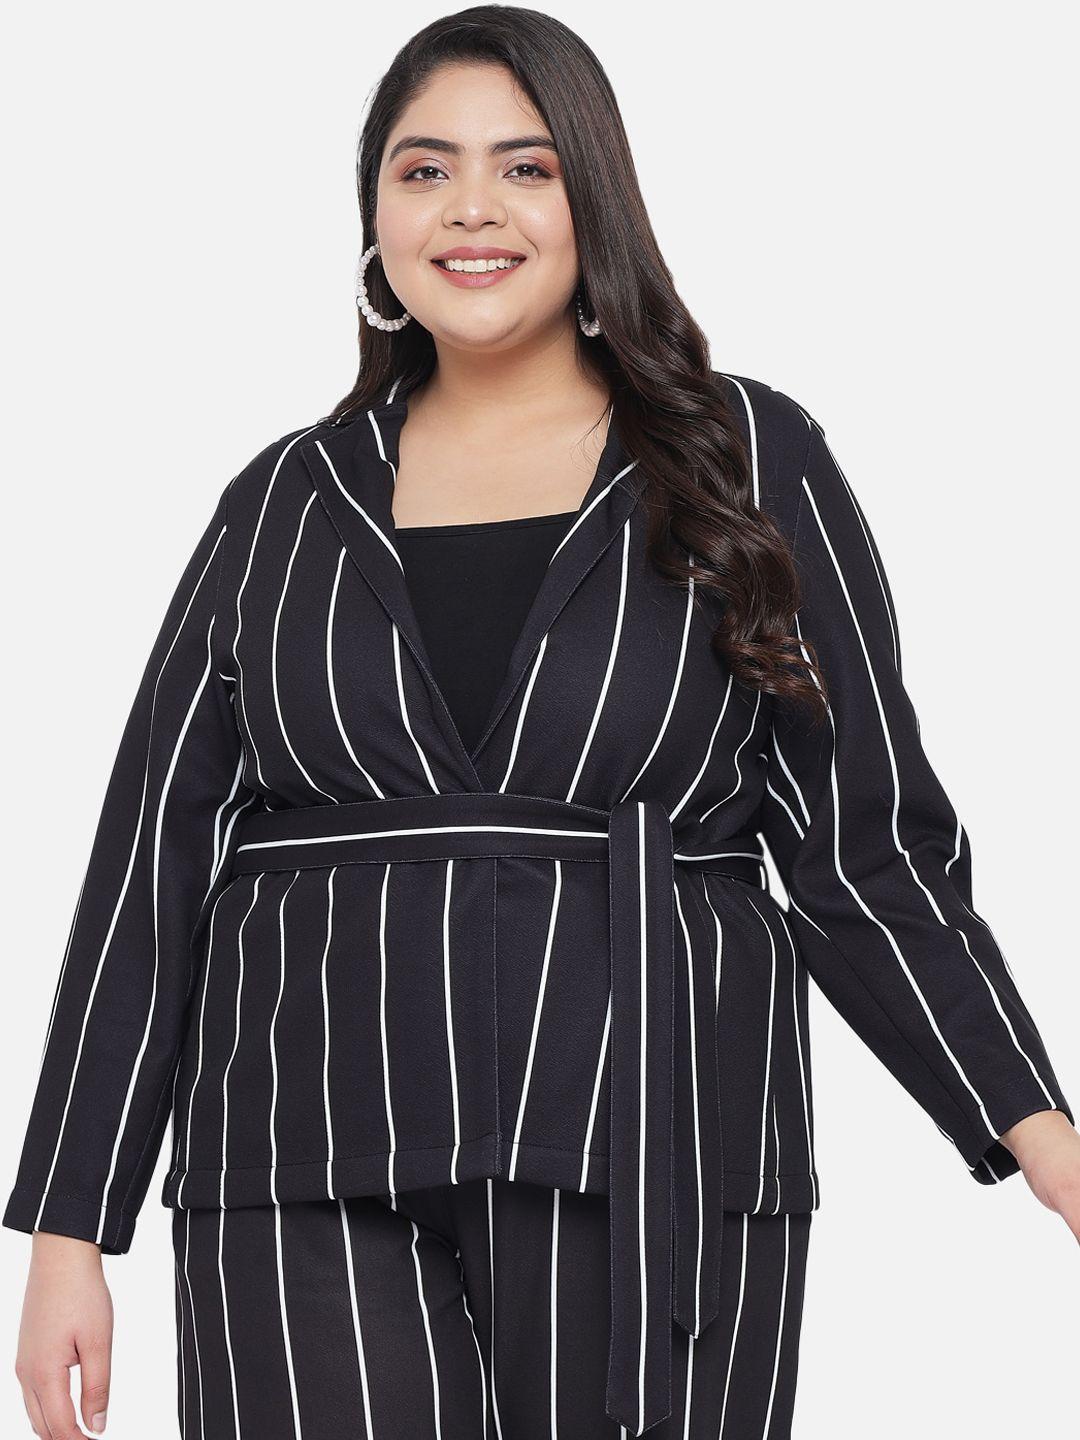 amydus women plus size black striped printed open front blazer